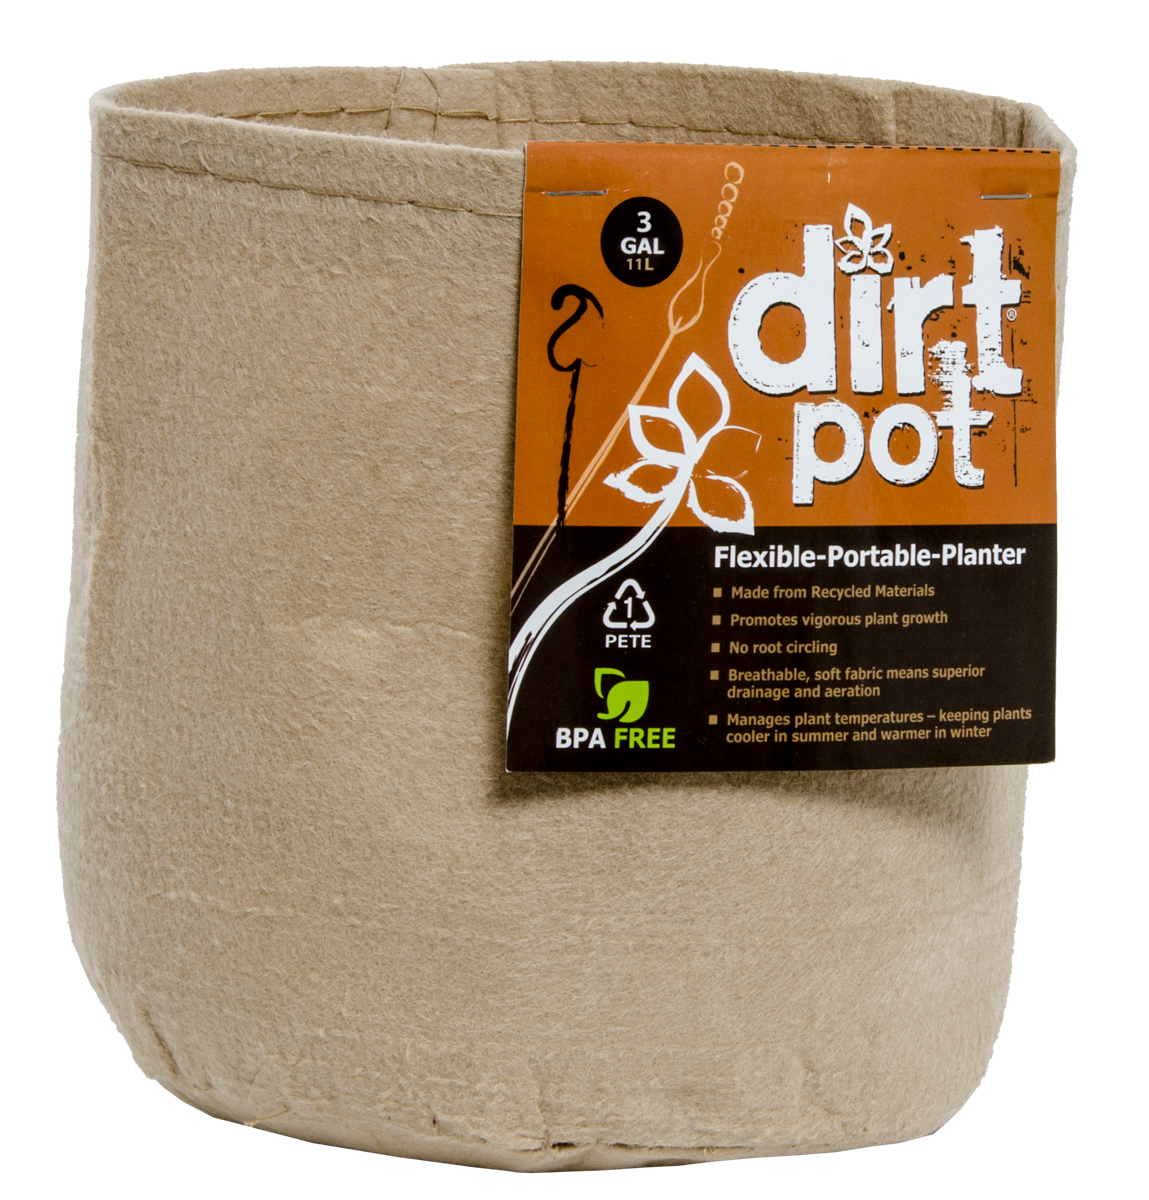 Picture for Dirt Pot Flexible Portable Planter, Tan, 3 gal, no handles